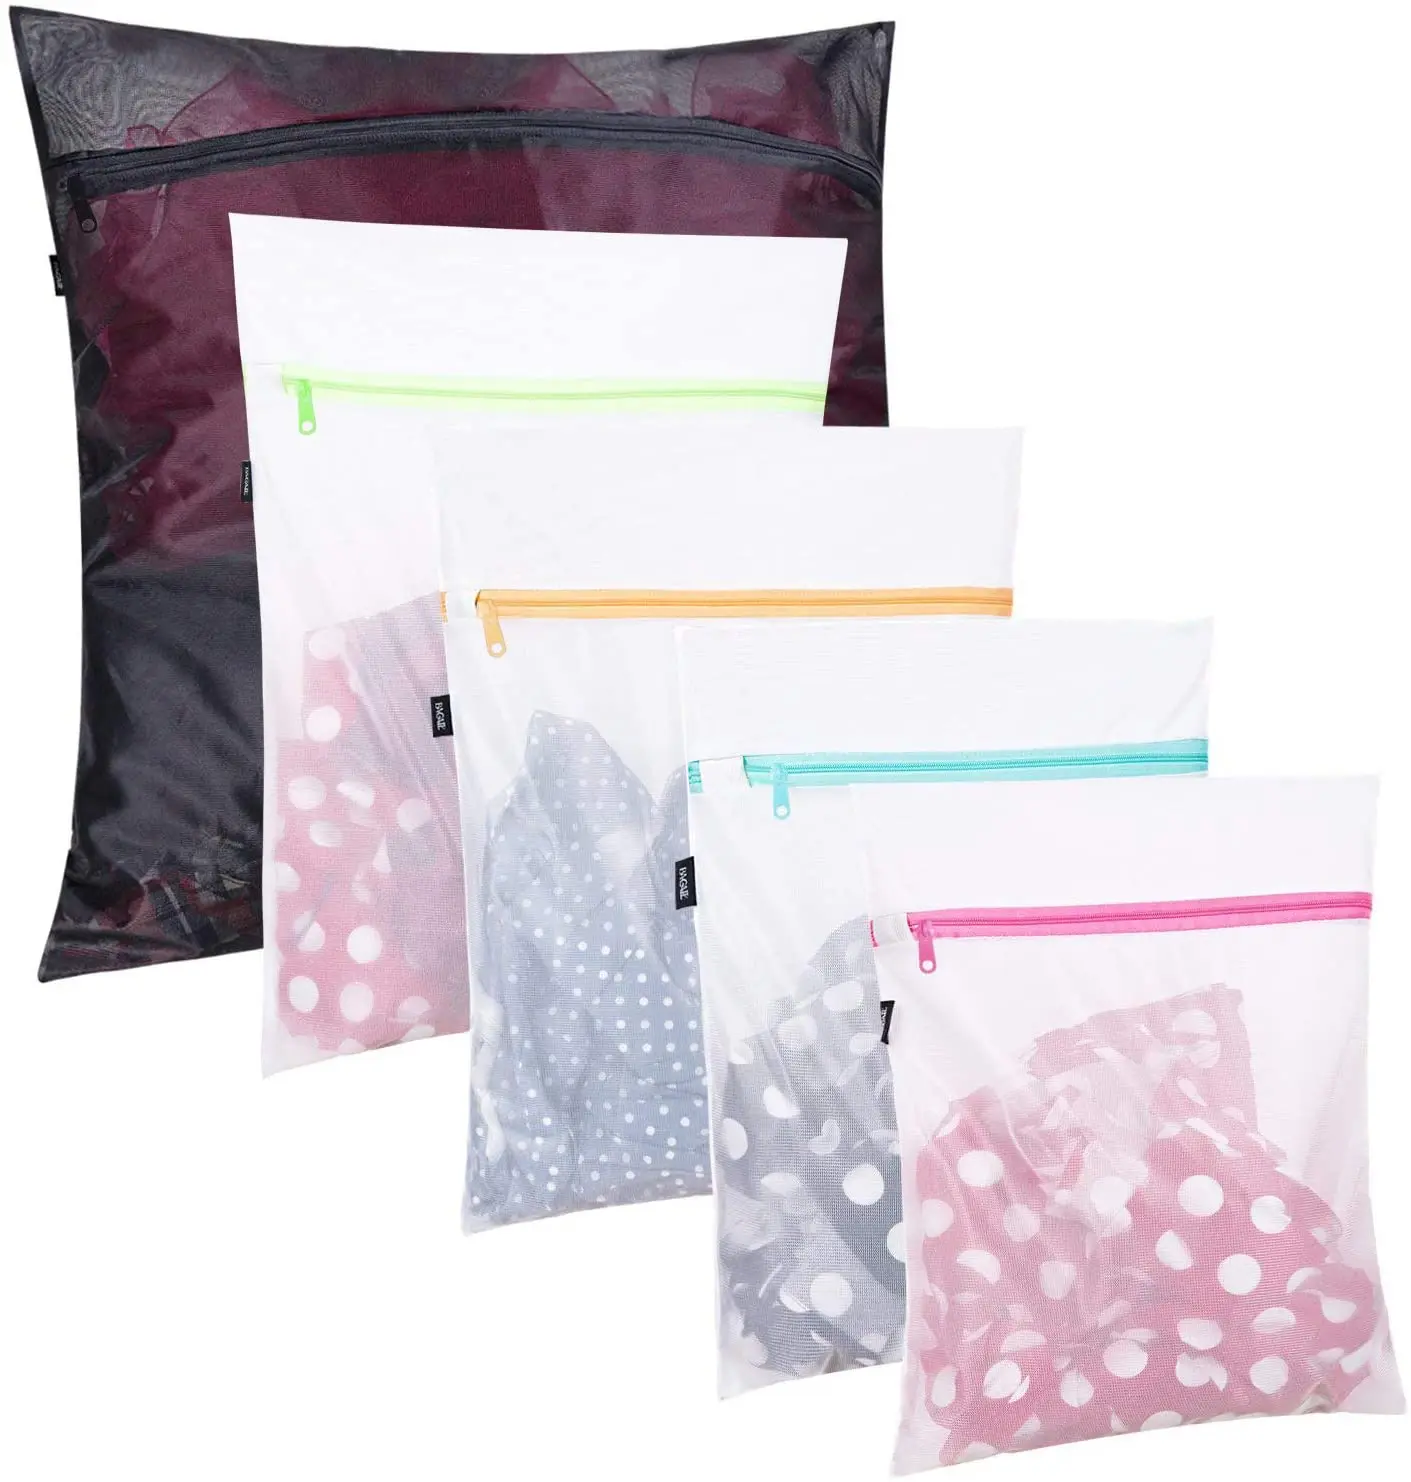 

Amazon hotting sale Set of 5 Mesh(1XL 2L 2M) Laundry Bags for Blouse Hosiery Stocking Underwear Bra Lingerie, White